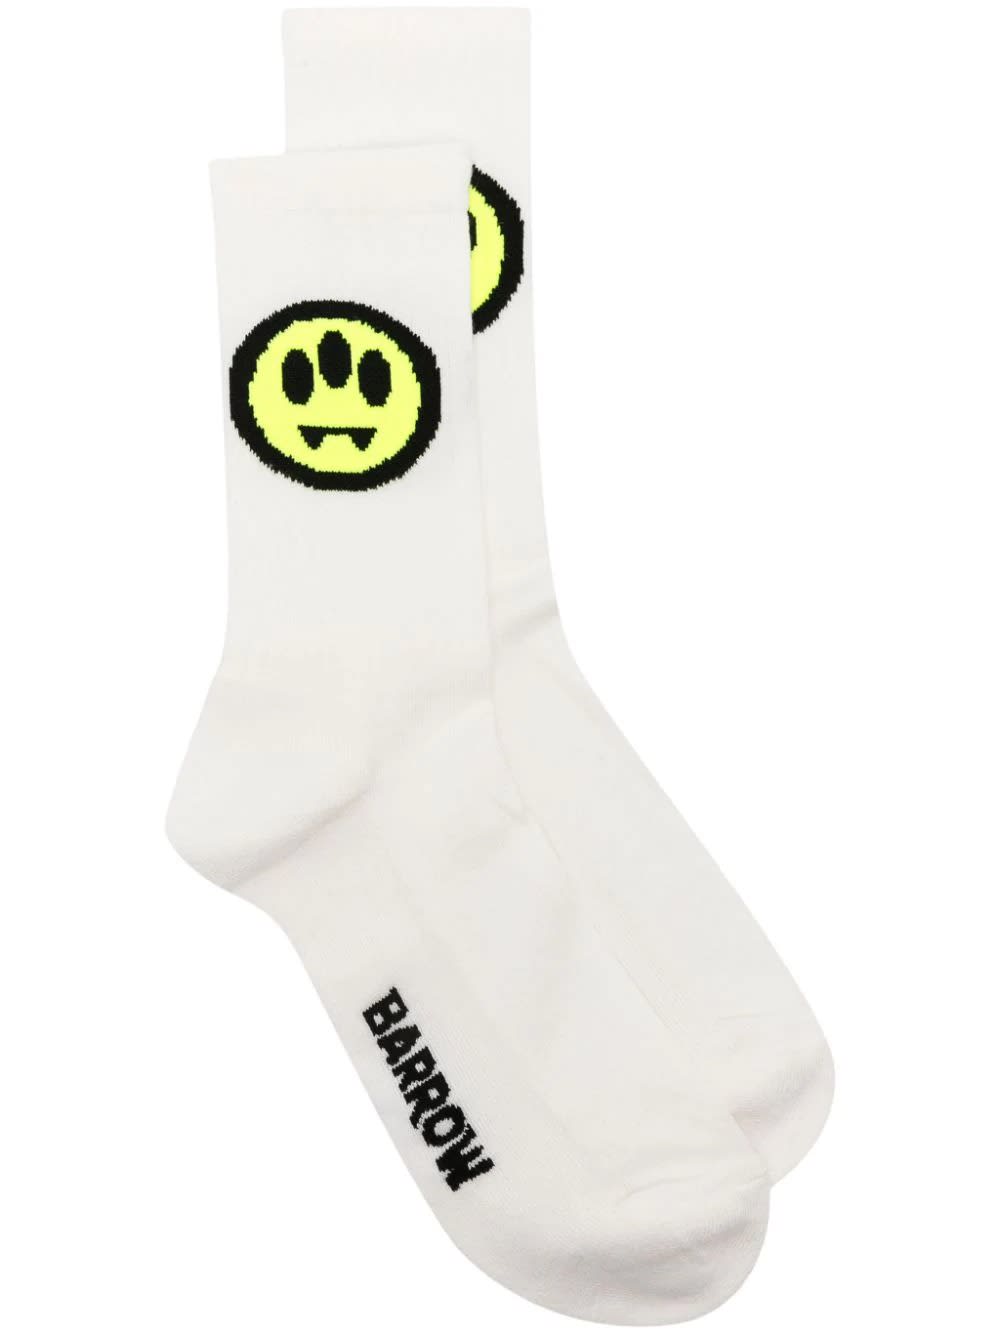 White Socks With Logo